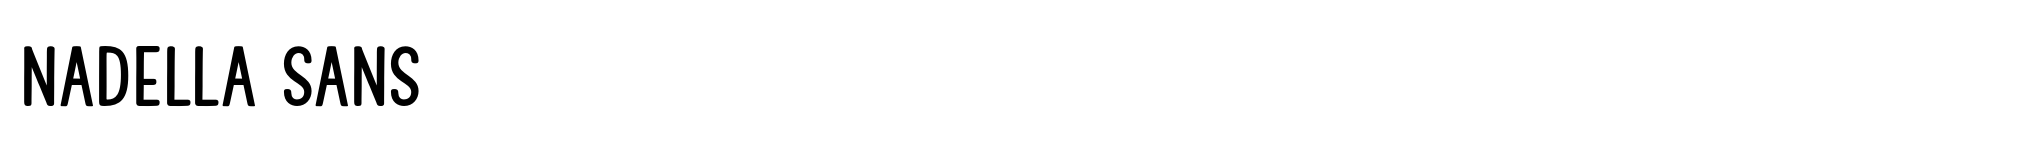 Nadella Sans image